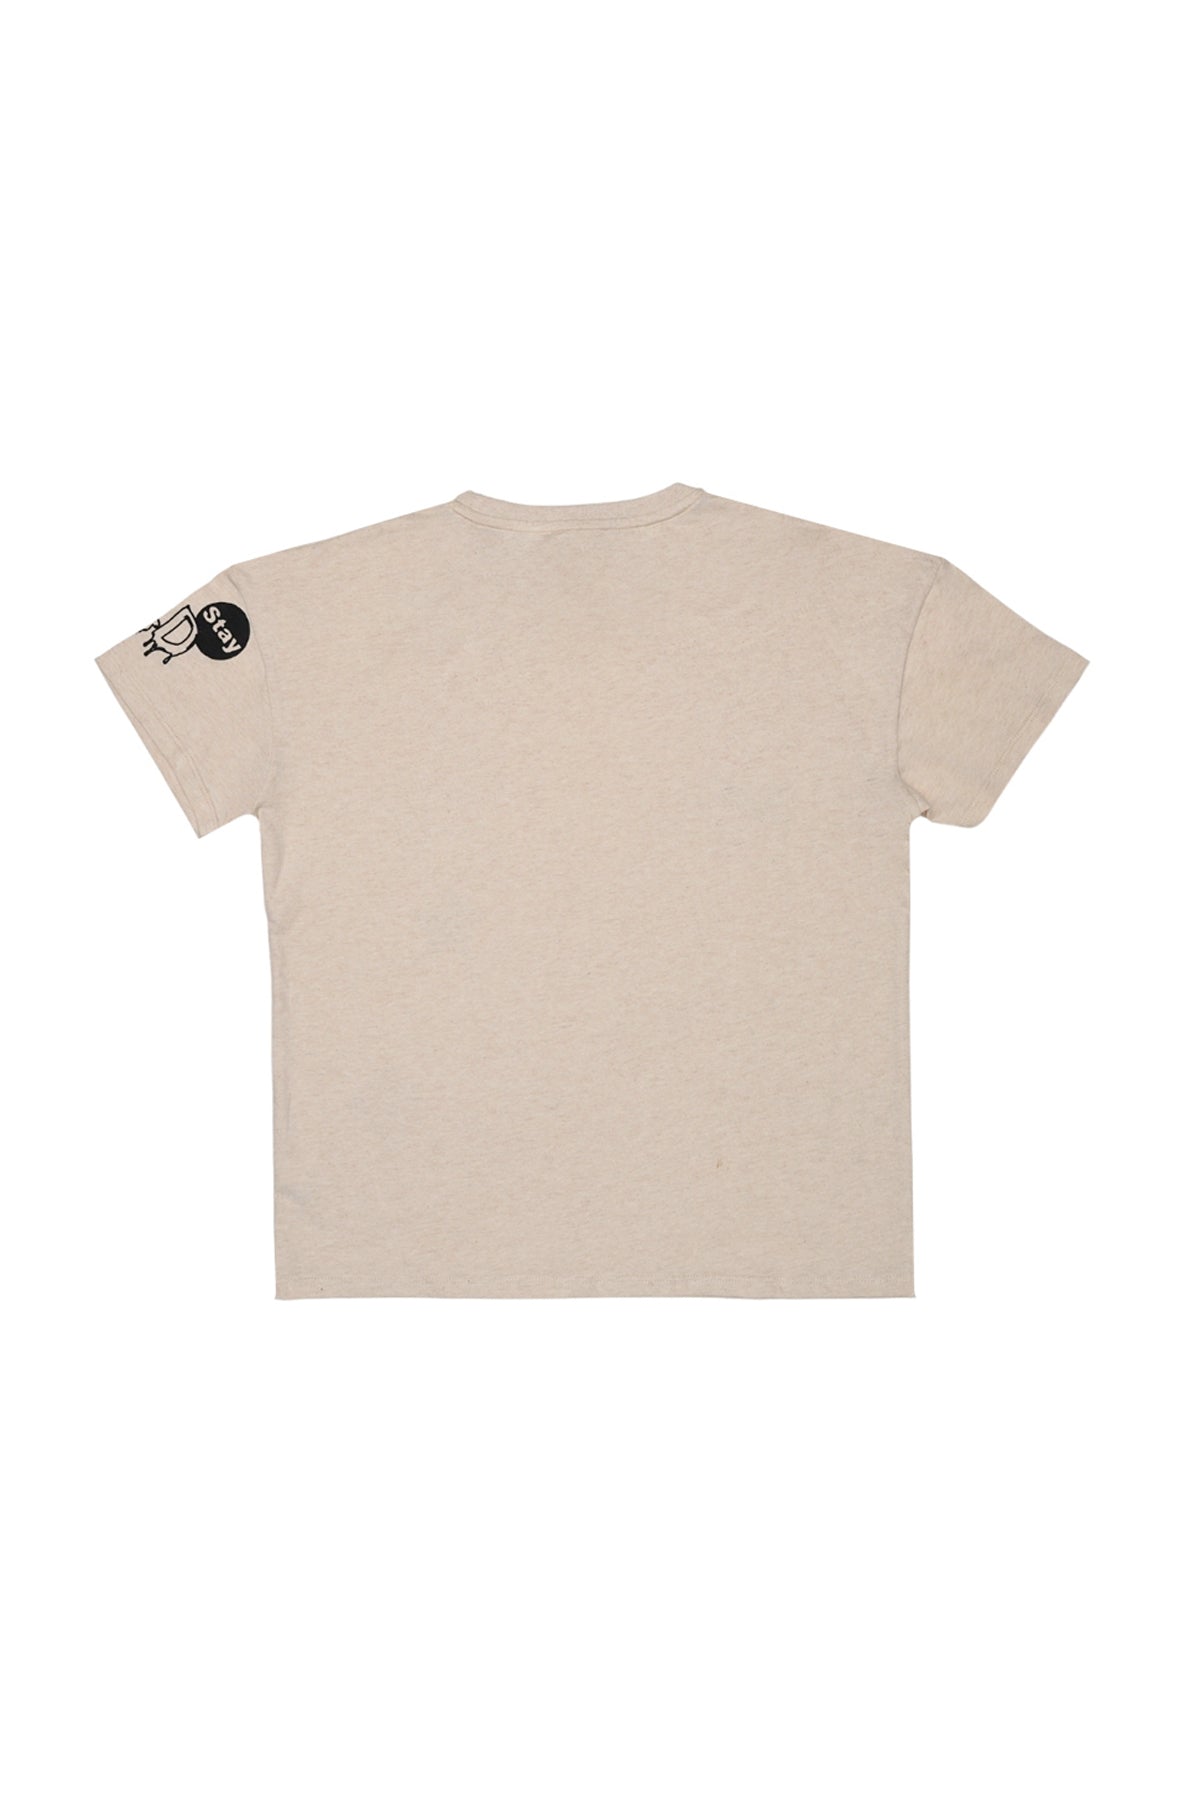 Drop Shoulder Graphic T-Shirt (SSGK-604)